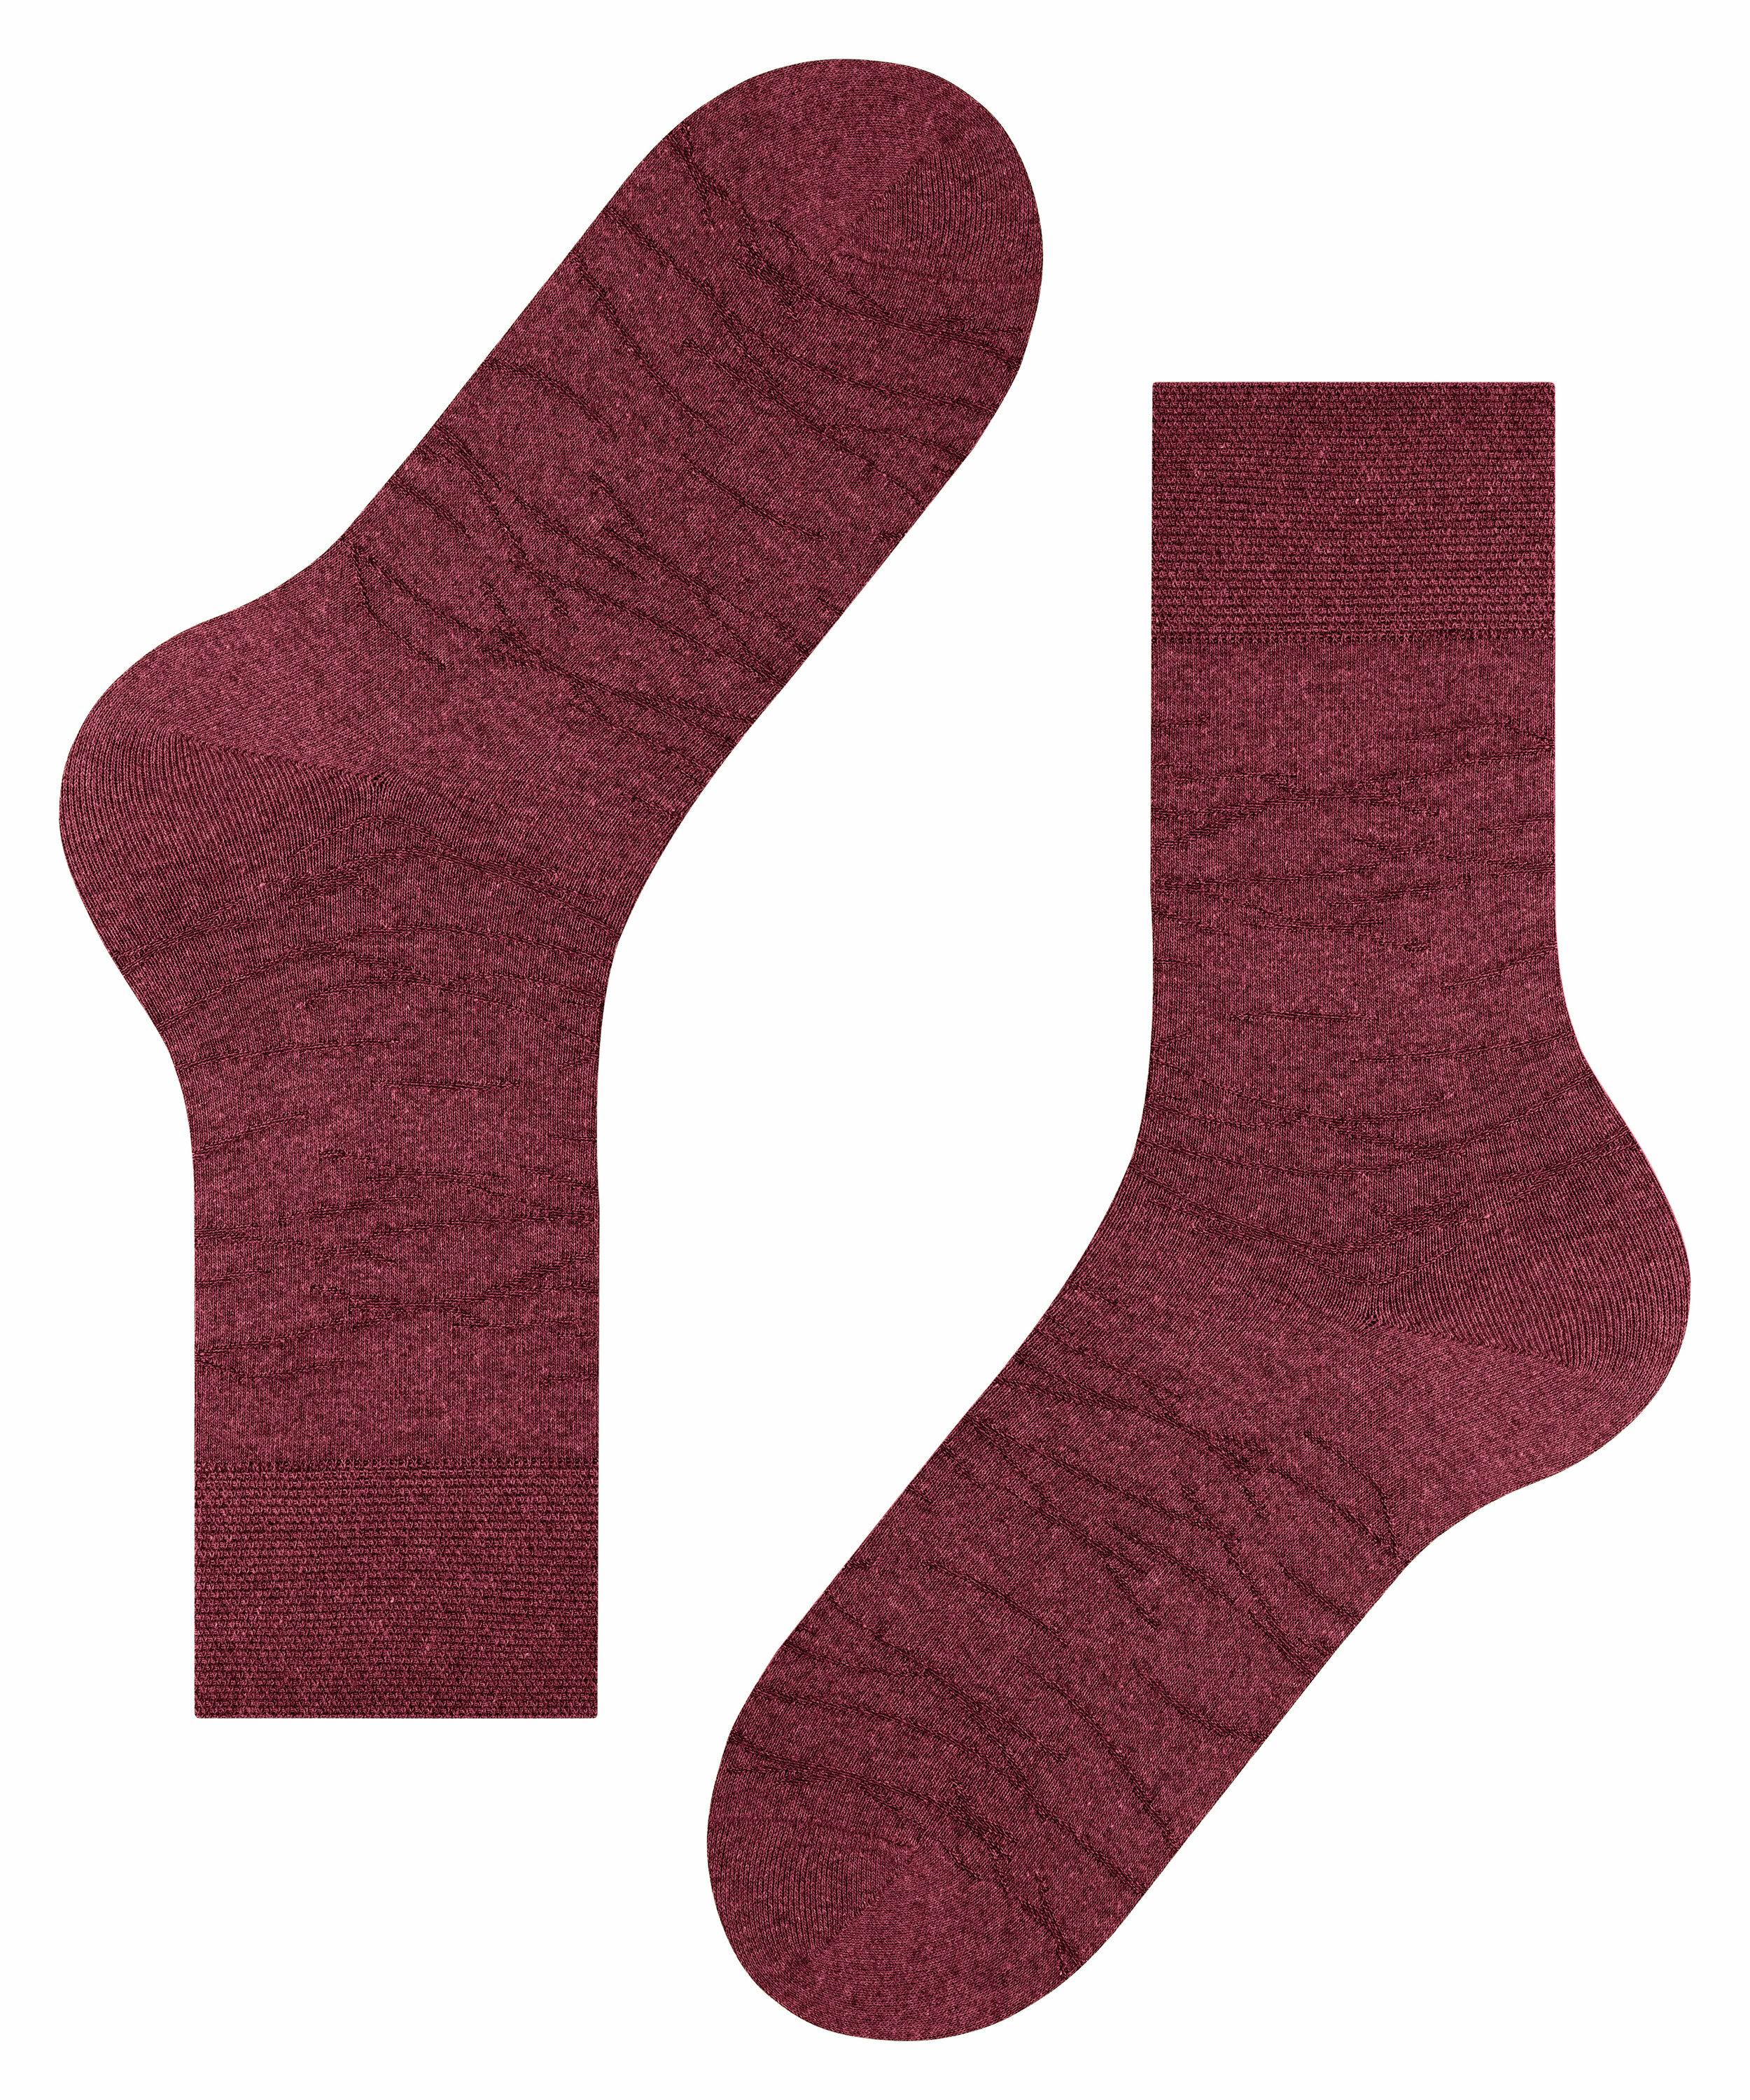 FALKE Sensitive Plant Soft Herren Socken, 43-46, Rot, Baumwolle, 12440-8413 günstig online kaufen